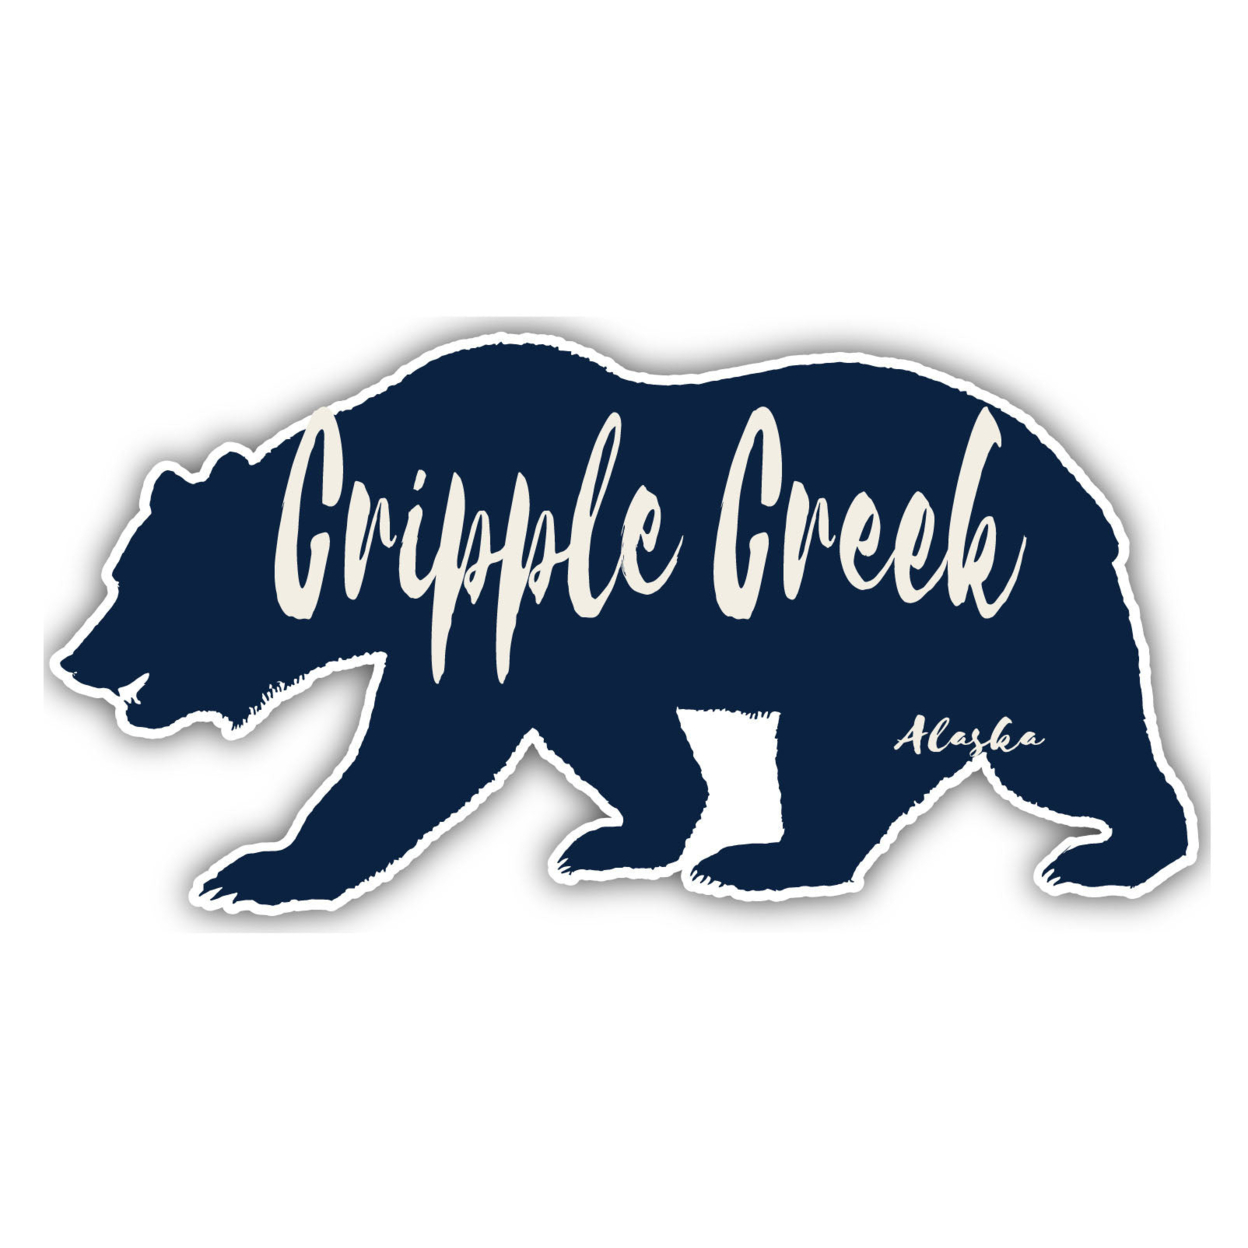 Cripple Creek Alaska Souvenir Decorative Stickers (Choose Theme And Size) - Single Unit, 2-Inch, Bear